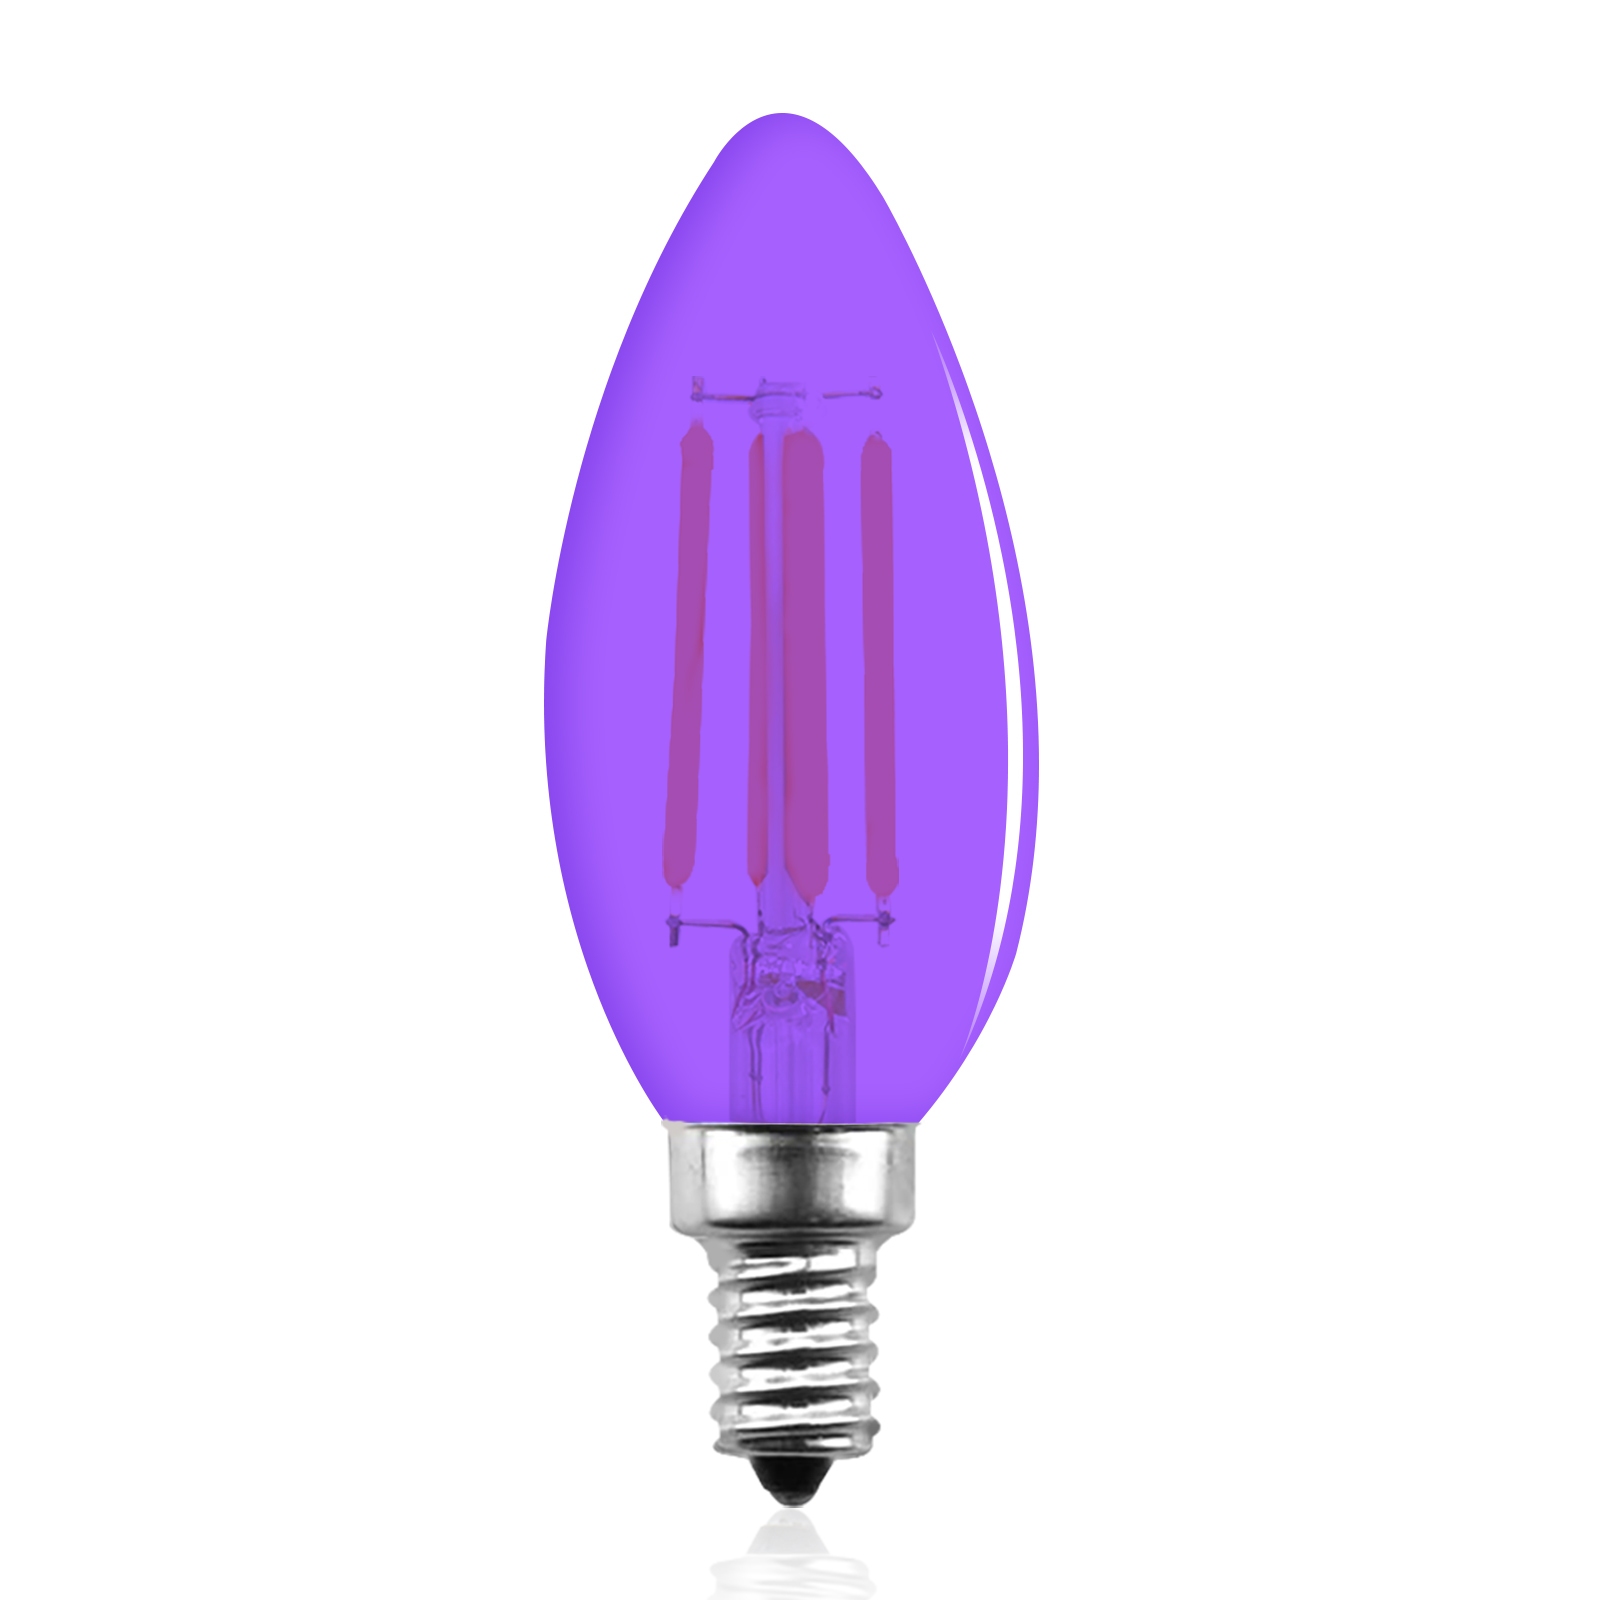 4W C35 E12 LED Vintage Purple Light Bulb